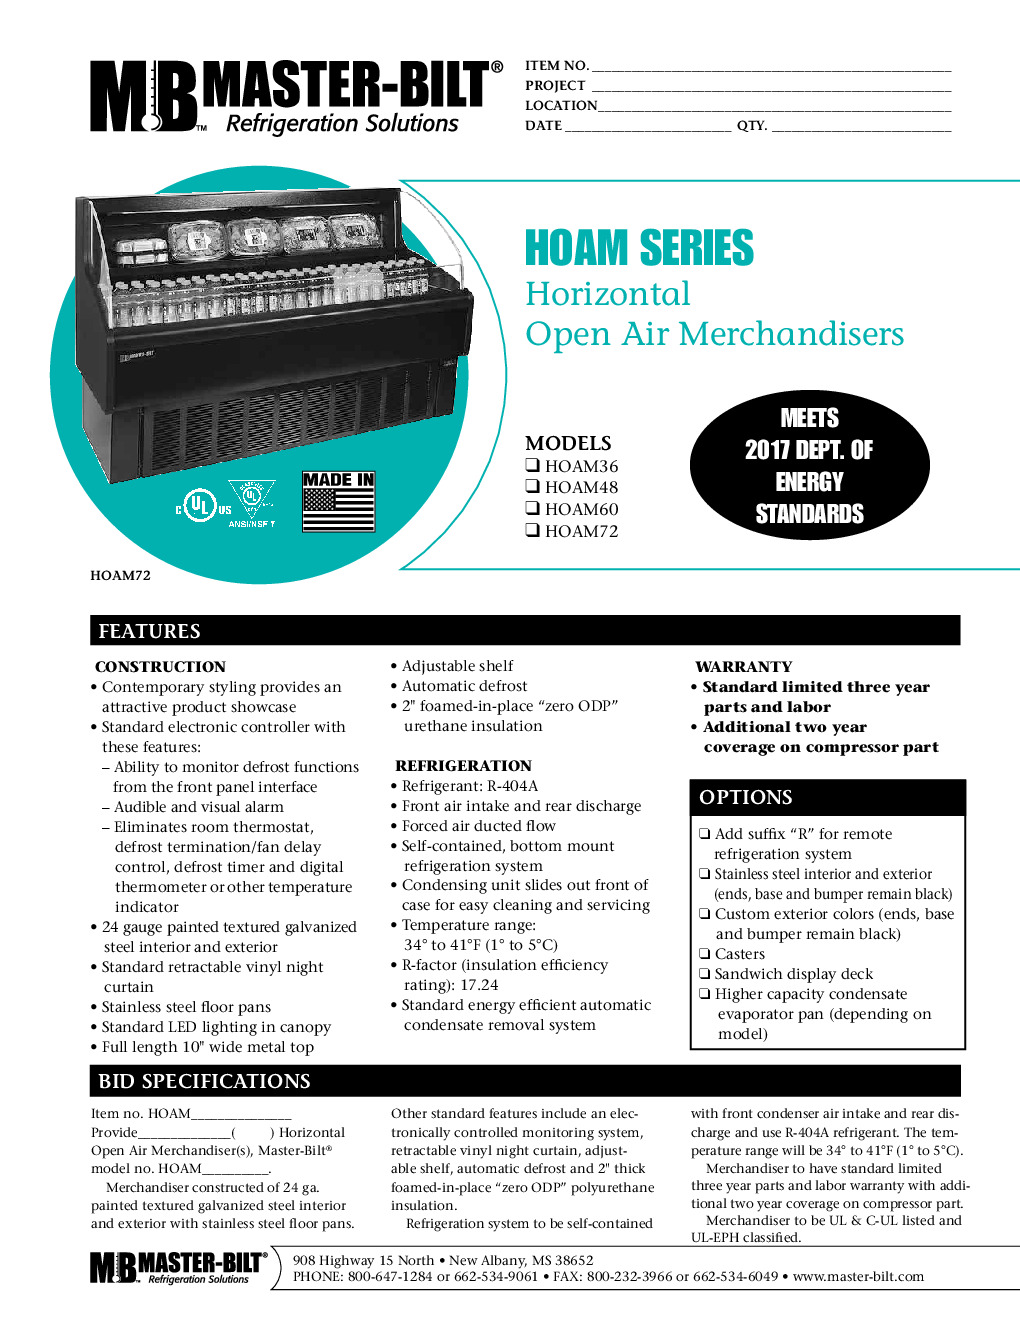 Master-Bilt HOAM48 Open Refrigerated Display Merchandiser